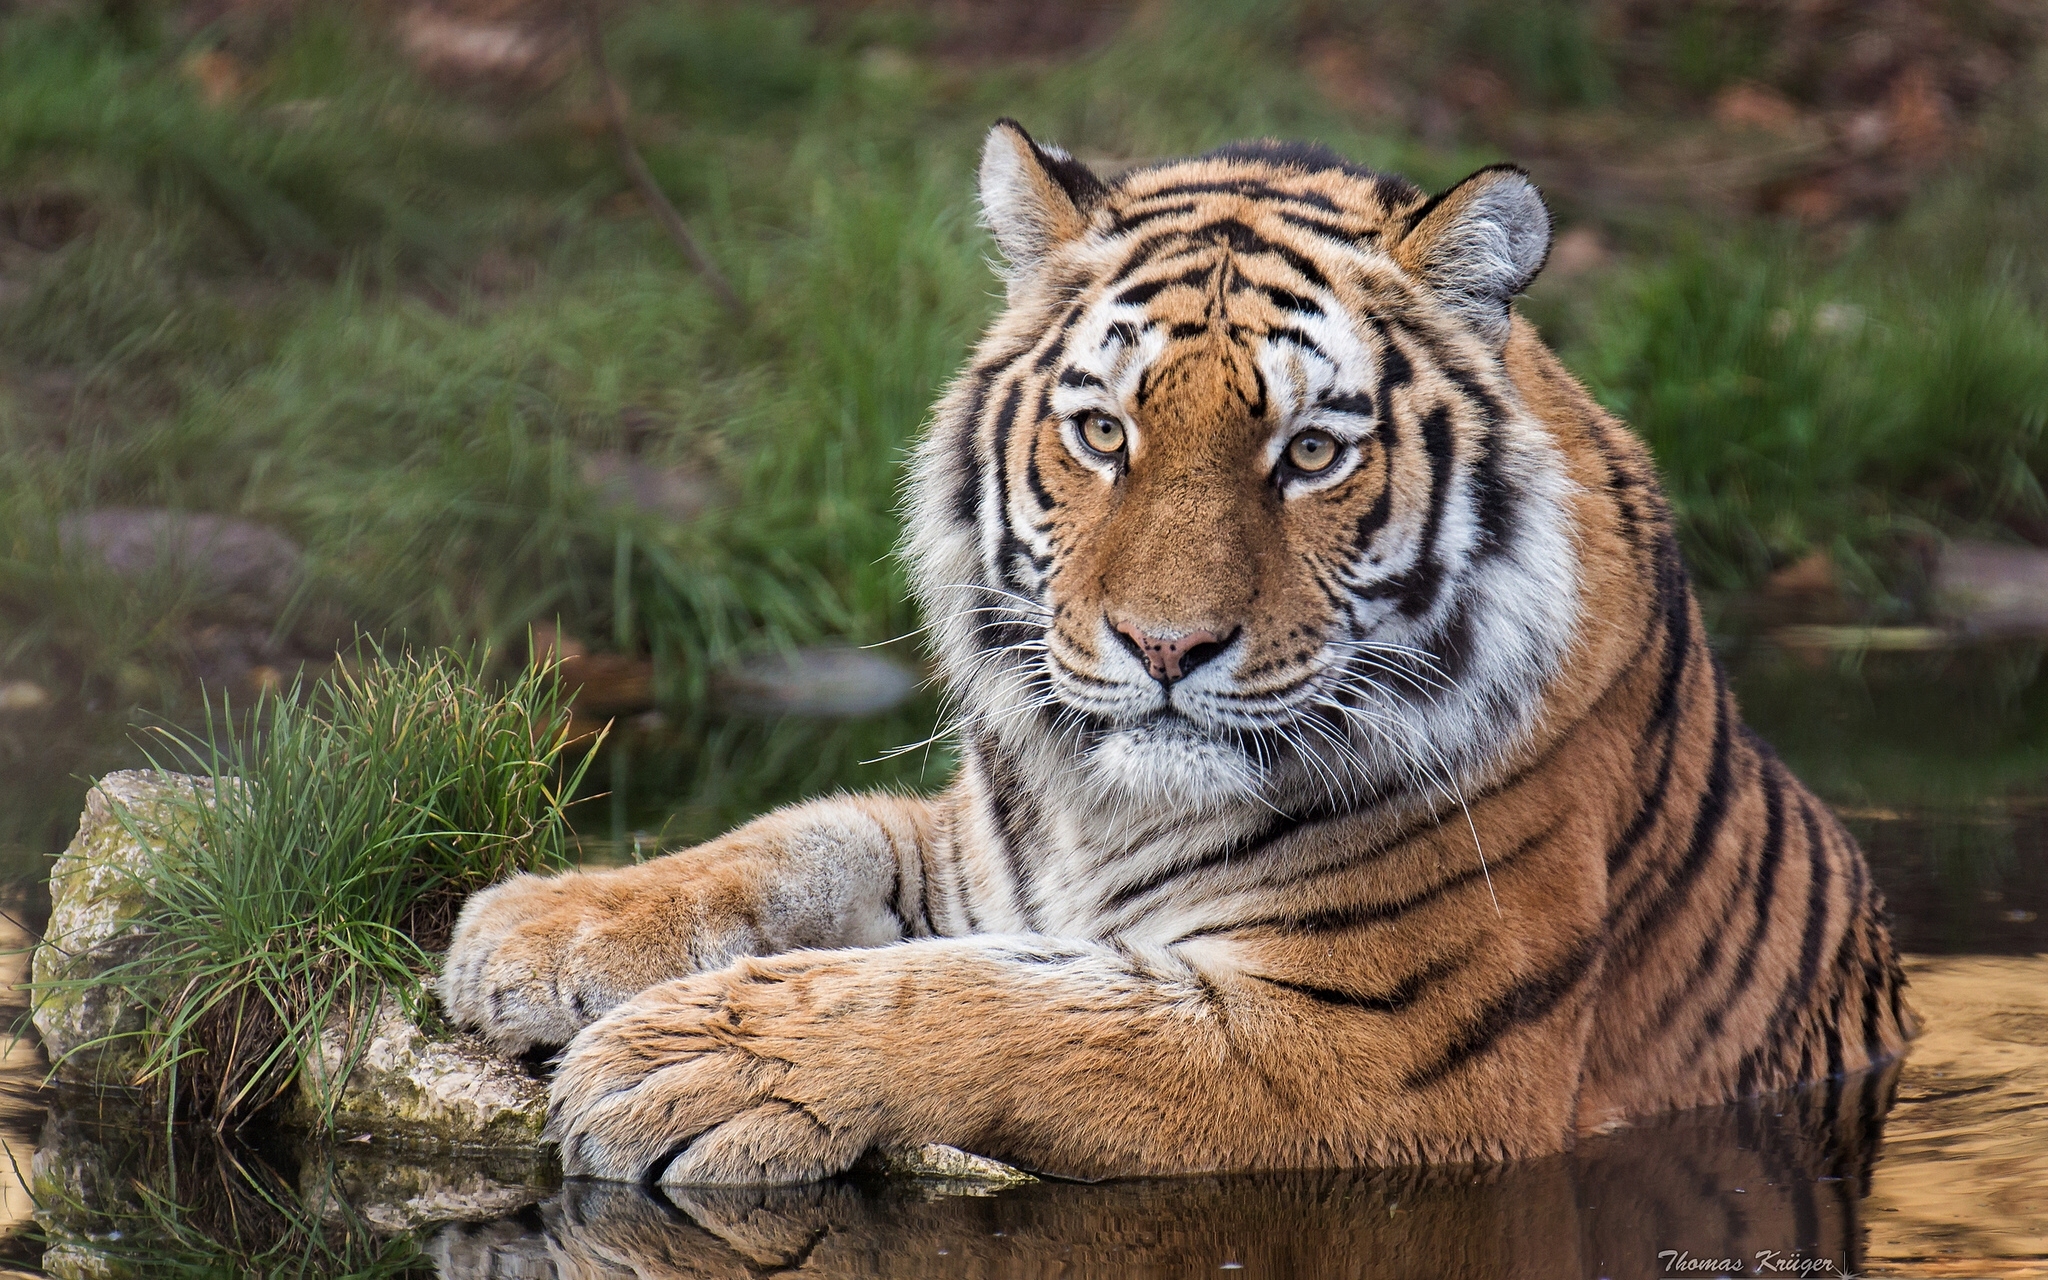 491636 descargar imagen animales, tigre, tigre de amur, agua, gatos: fondos de pantalla y protectores de pantalla gratis